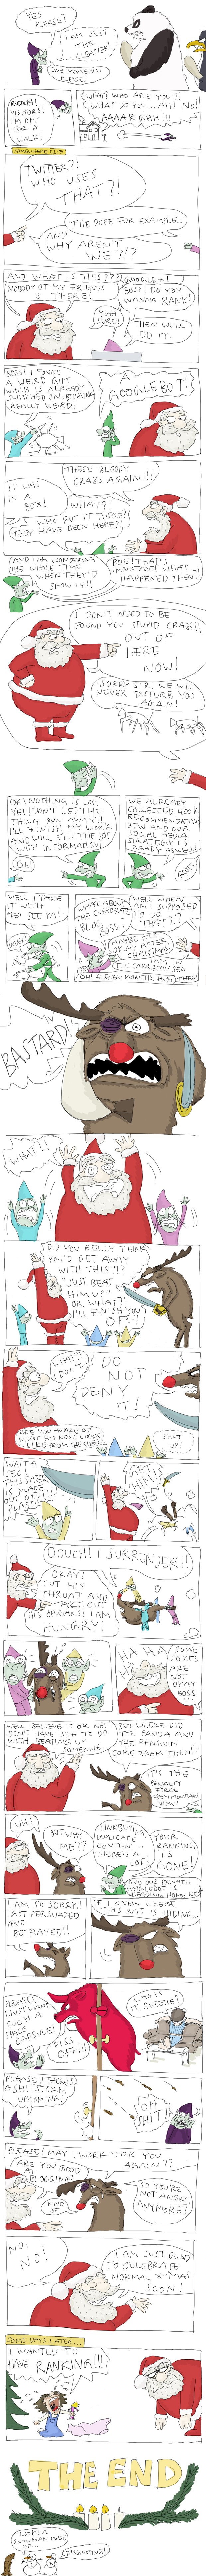 An SEO Christmas Story Part 4